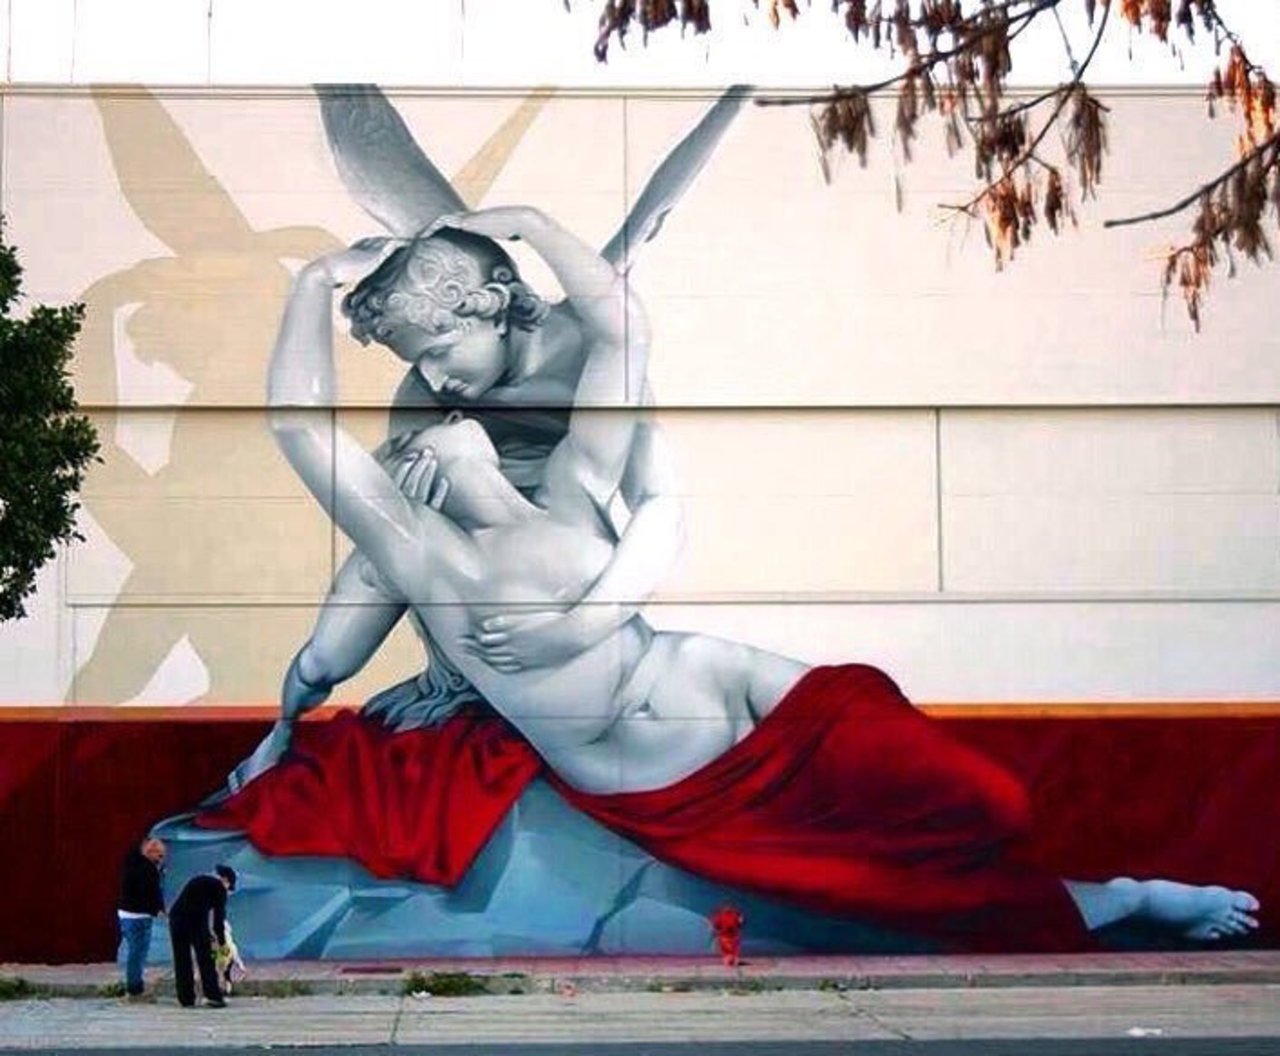 #mural by Man O Matic #Spain #art #graffiti #streetart #urbanart https://t.co/19e4dWUm1Z